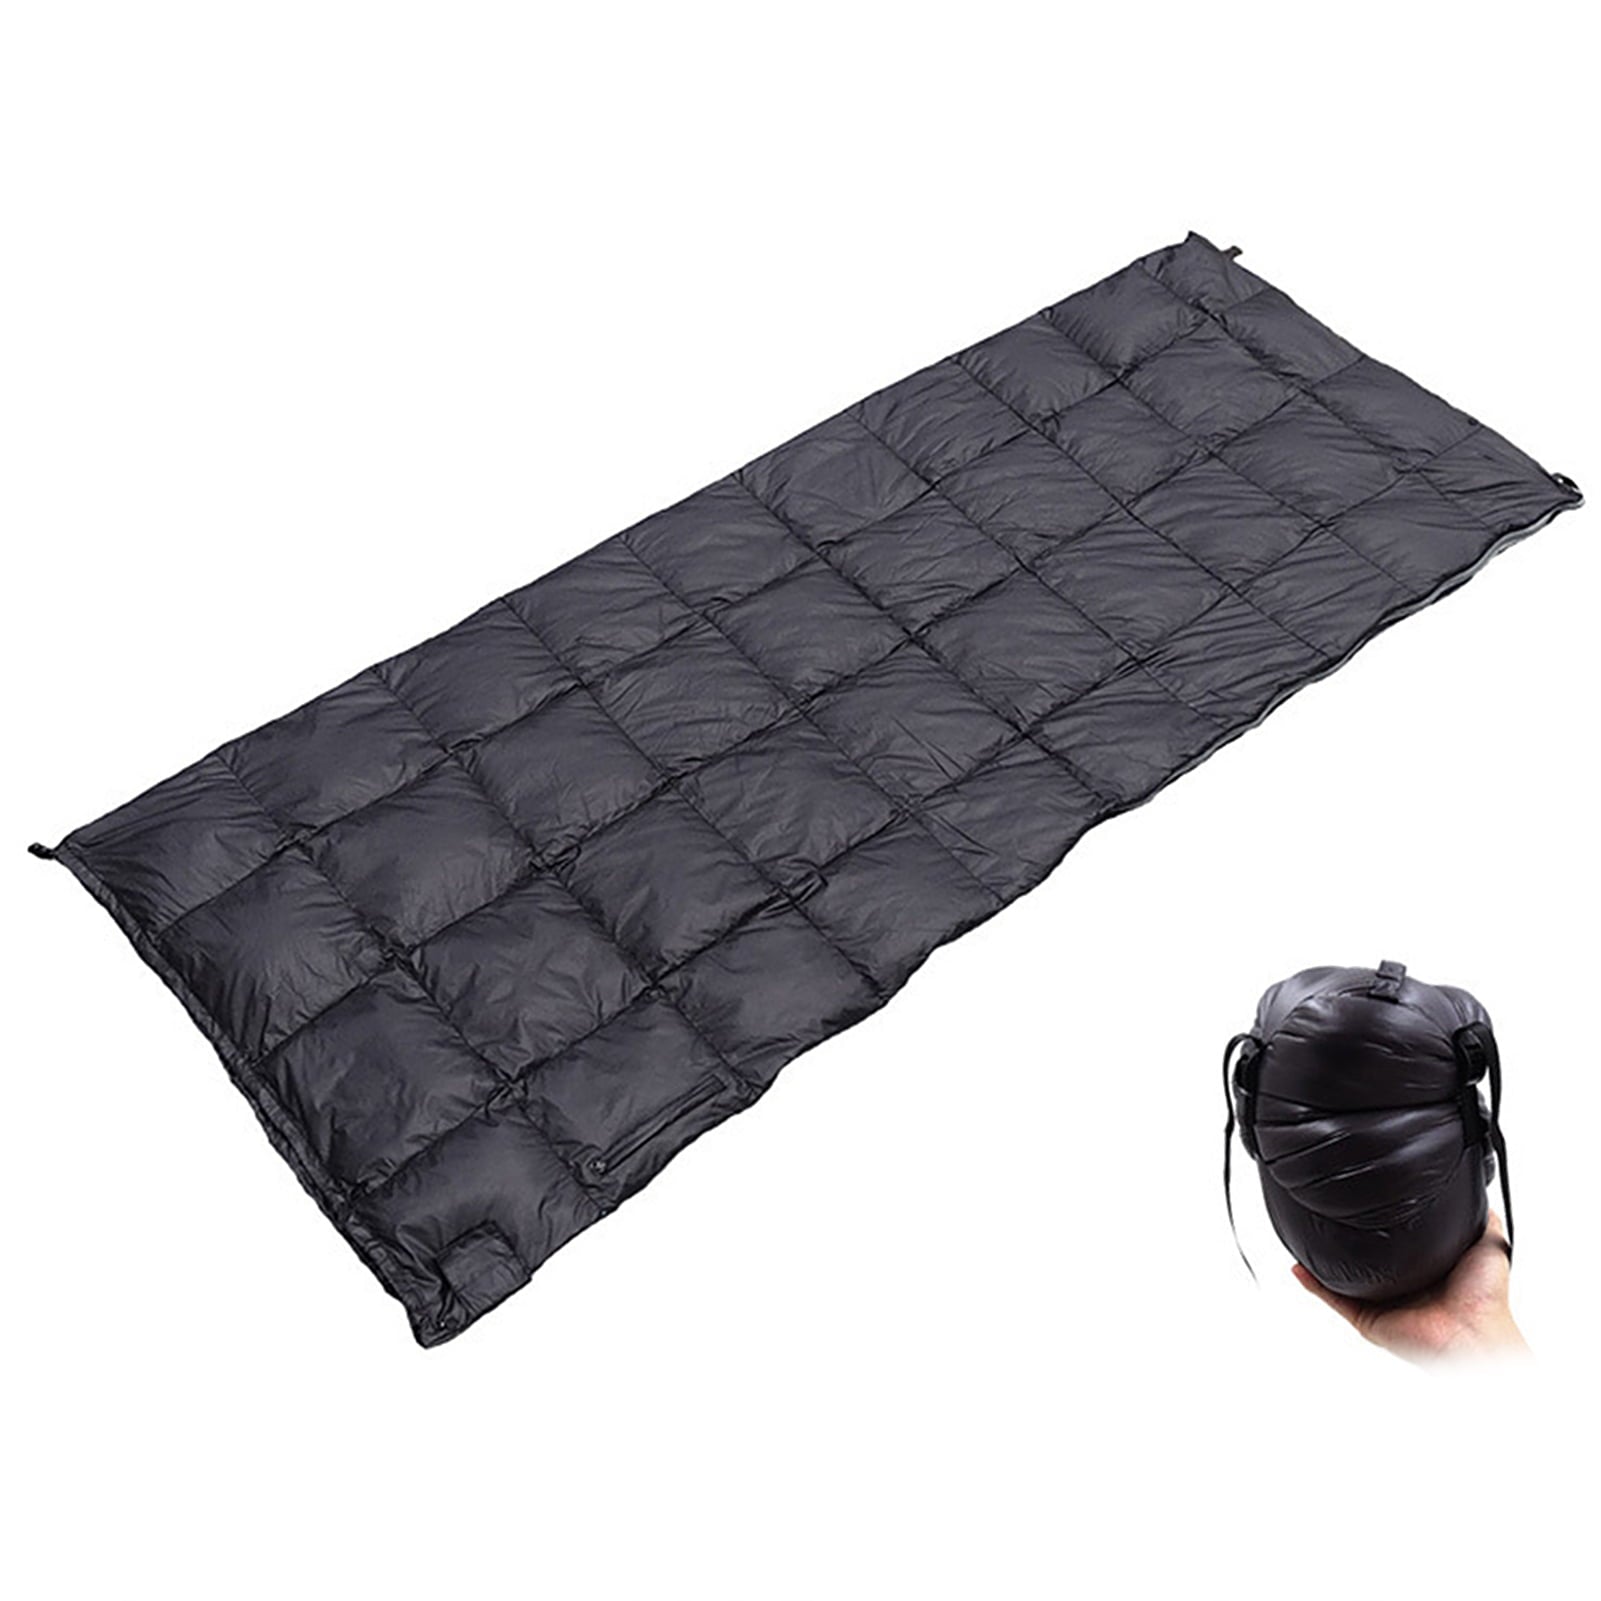 Tomshine Winter Warm Sleeping Bag Outdoor Water Repellent Ultra Down Sleeping Sack Backpacking Camping Hiking Sleeping Bag